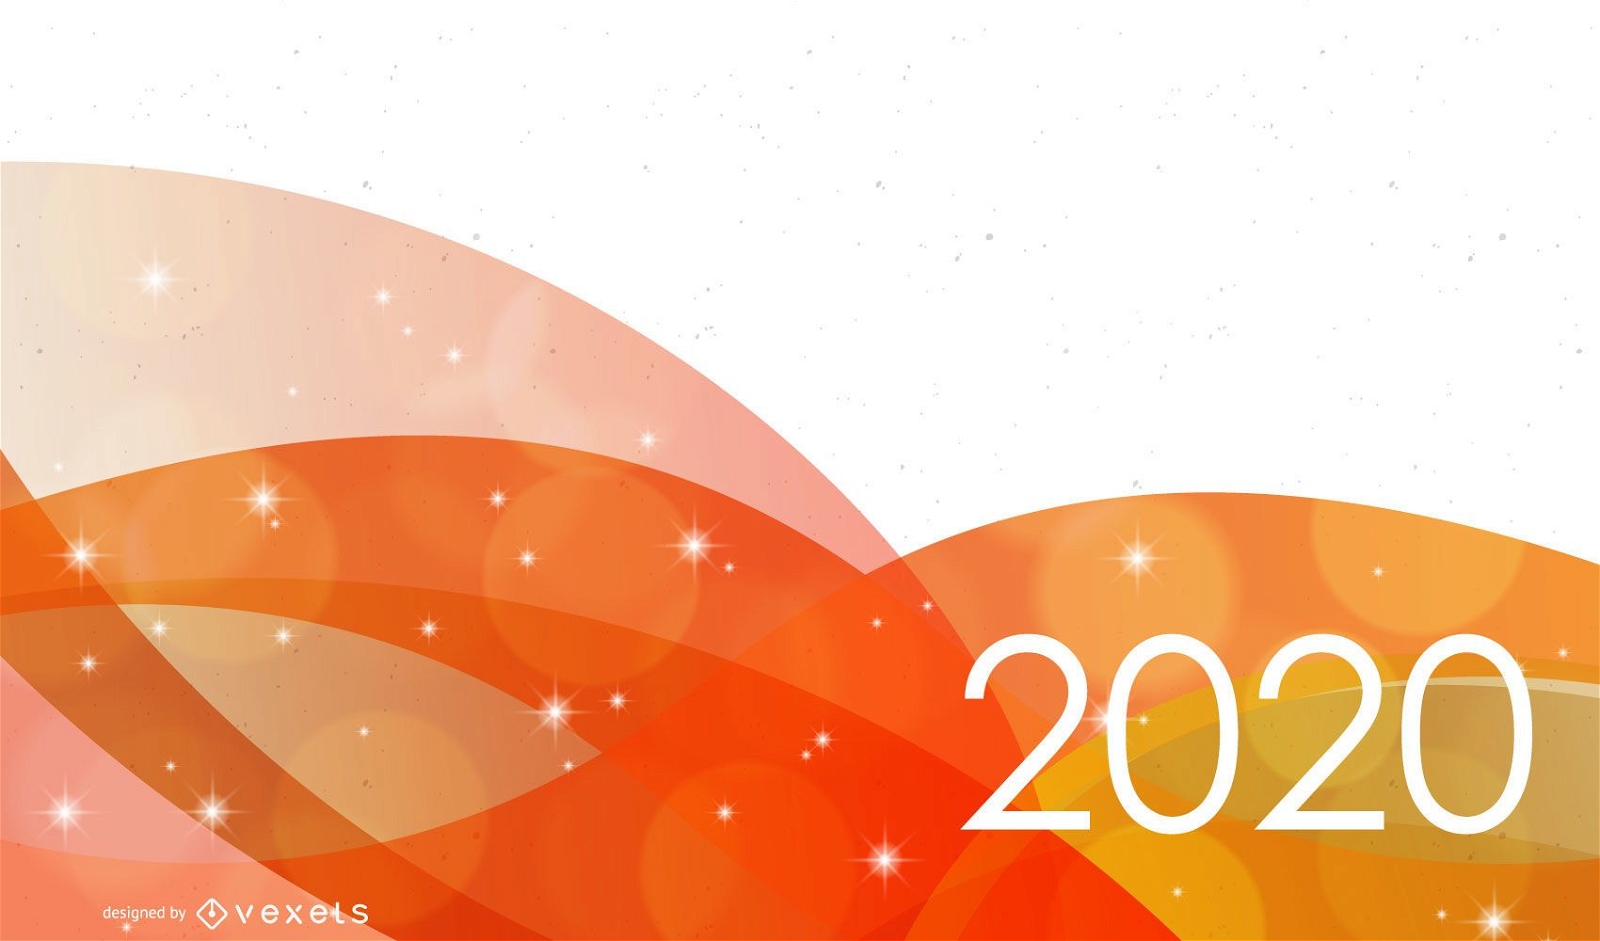 2020 New Year Background with Orange Waves